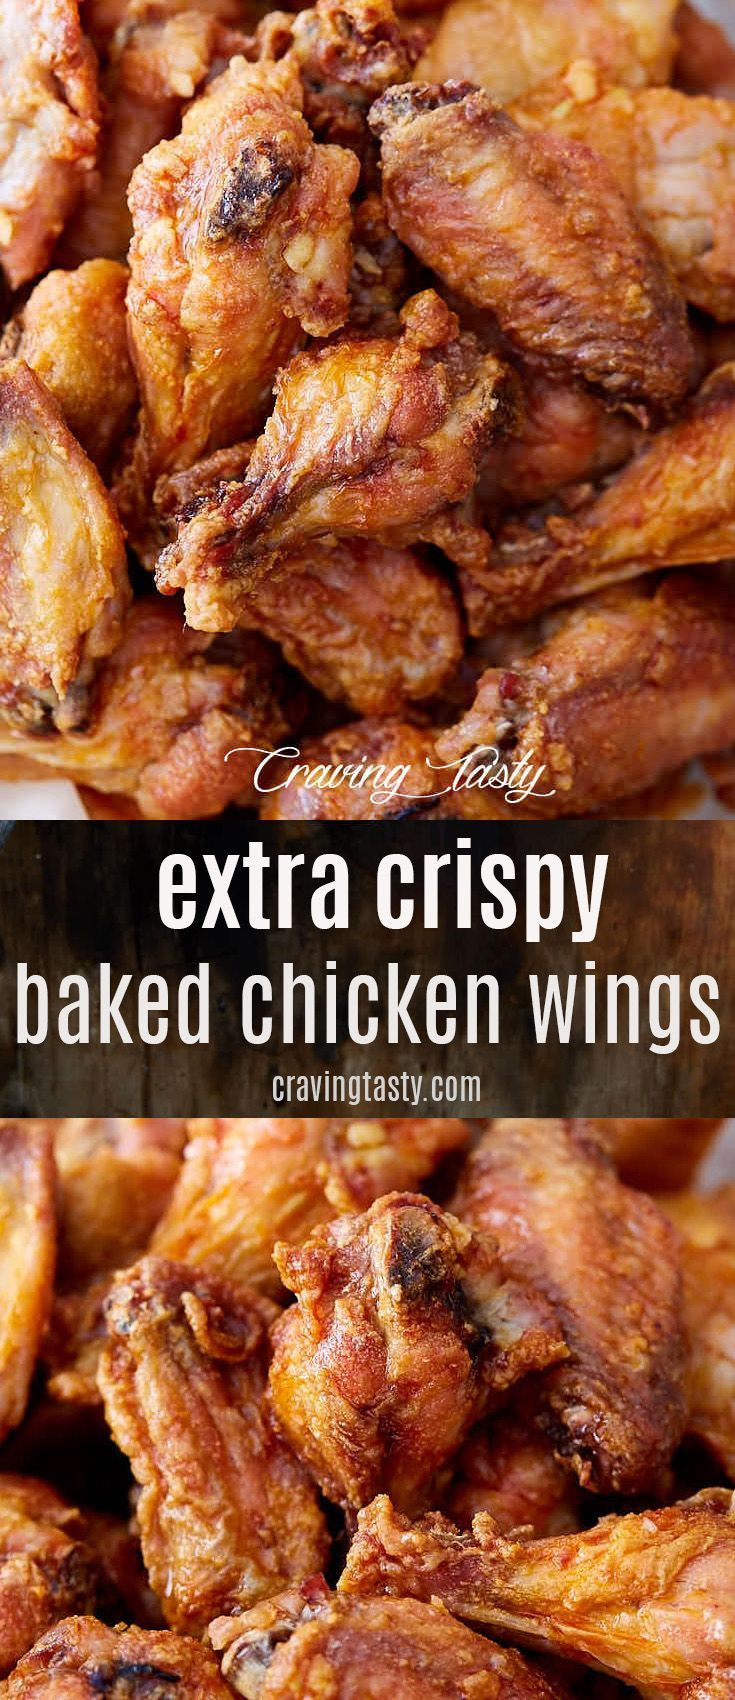 Crispy Chicken Wings Baking Powder Beautiful Super Crispy Baked Chicken Wings the Secret is to Use